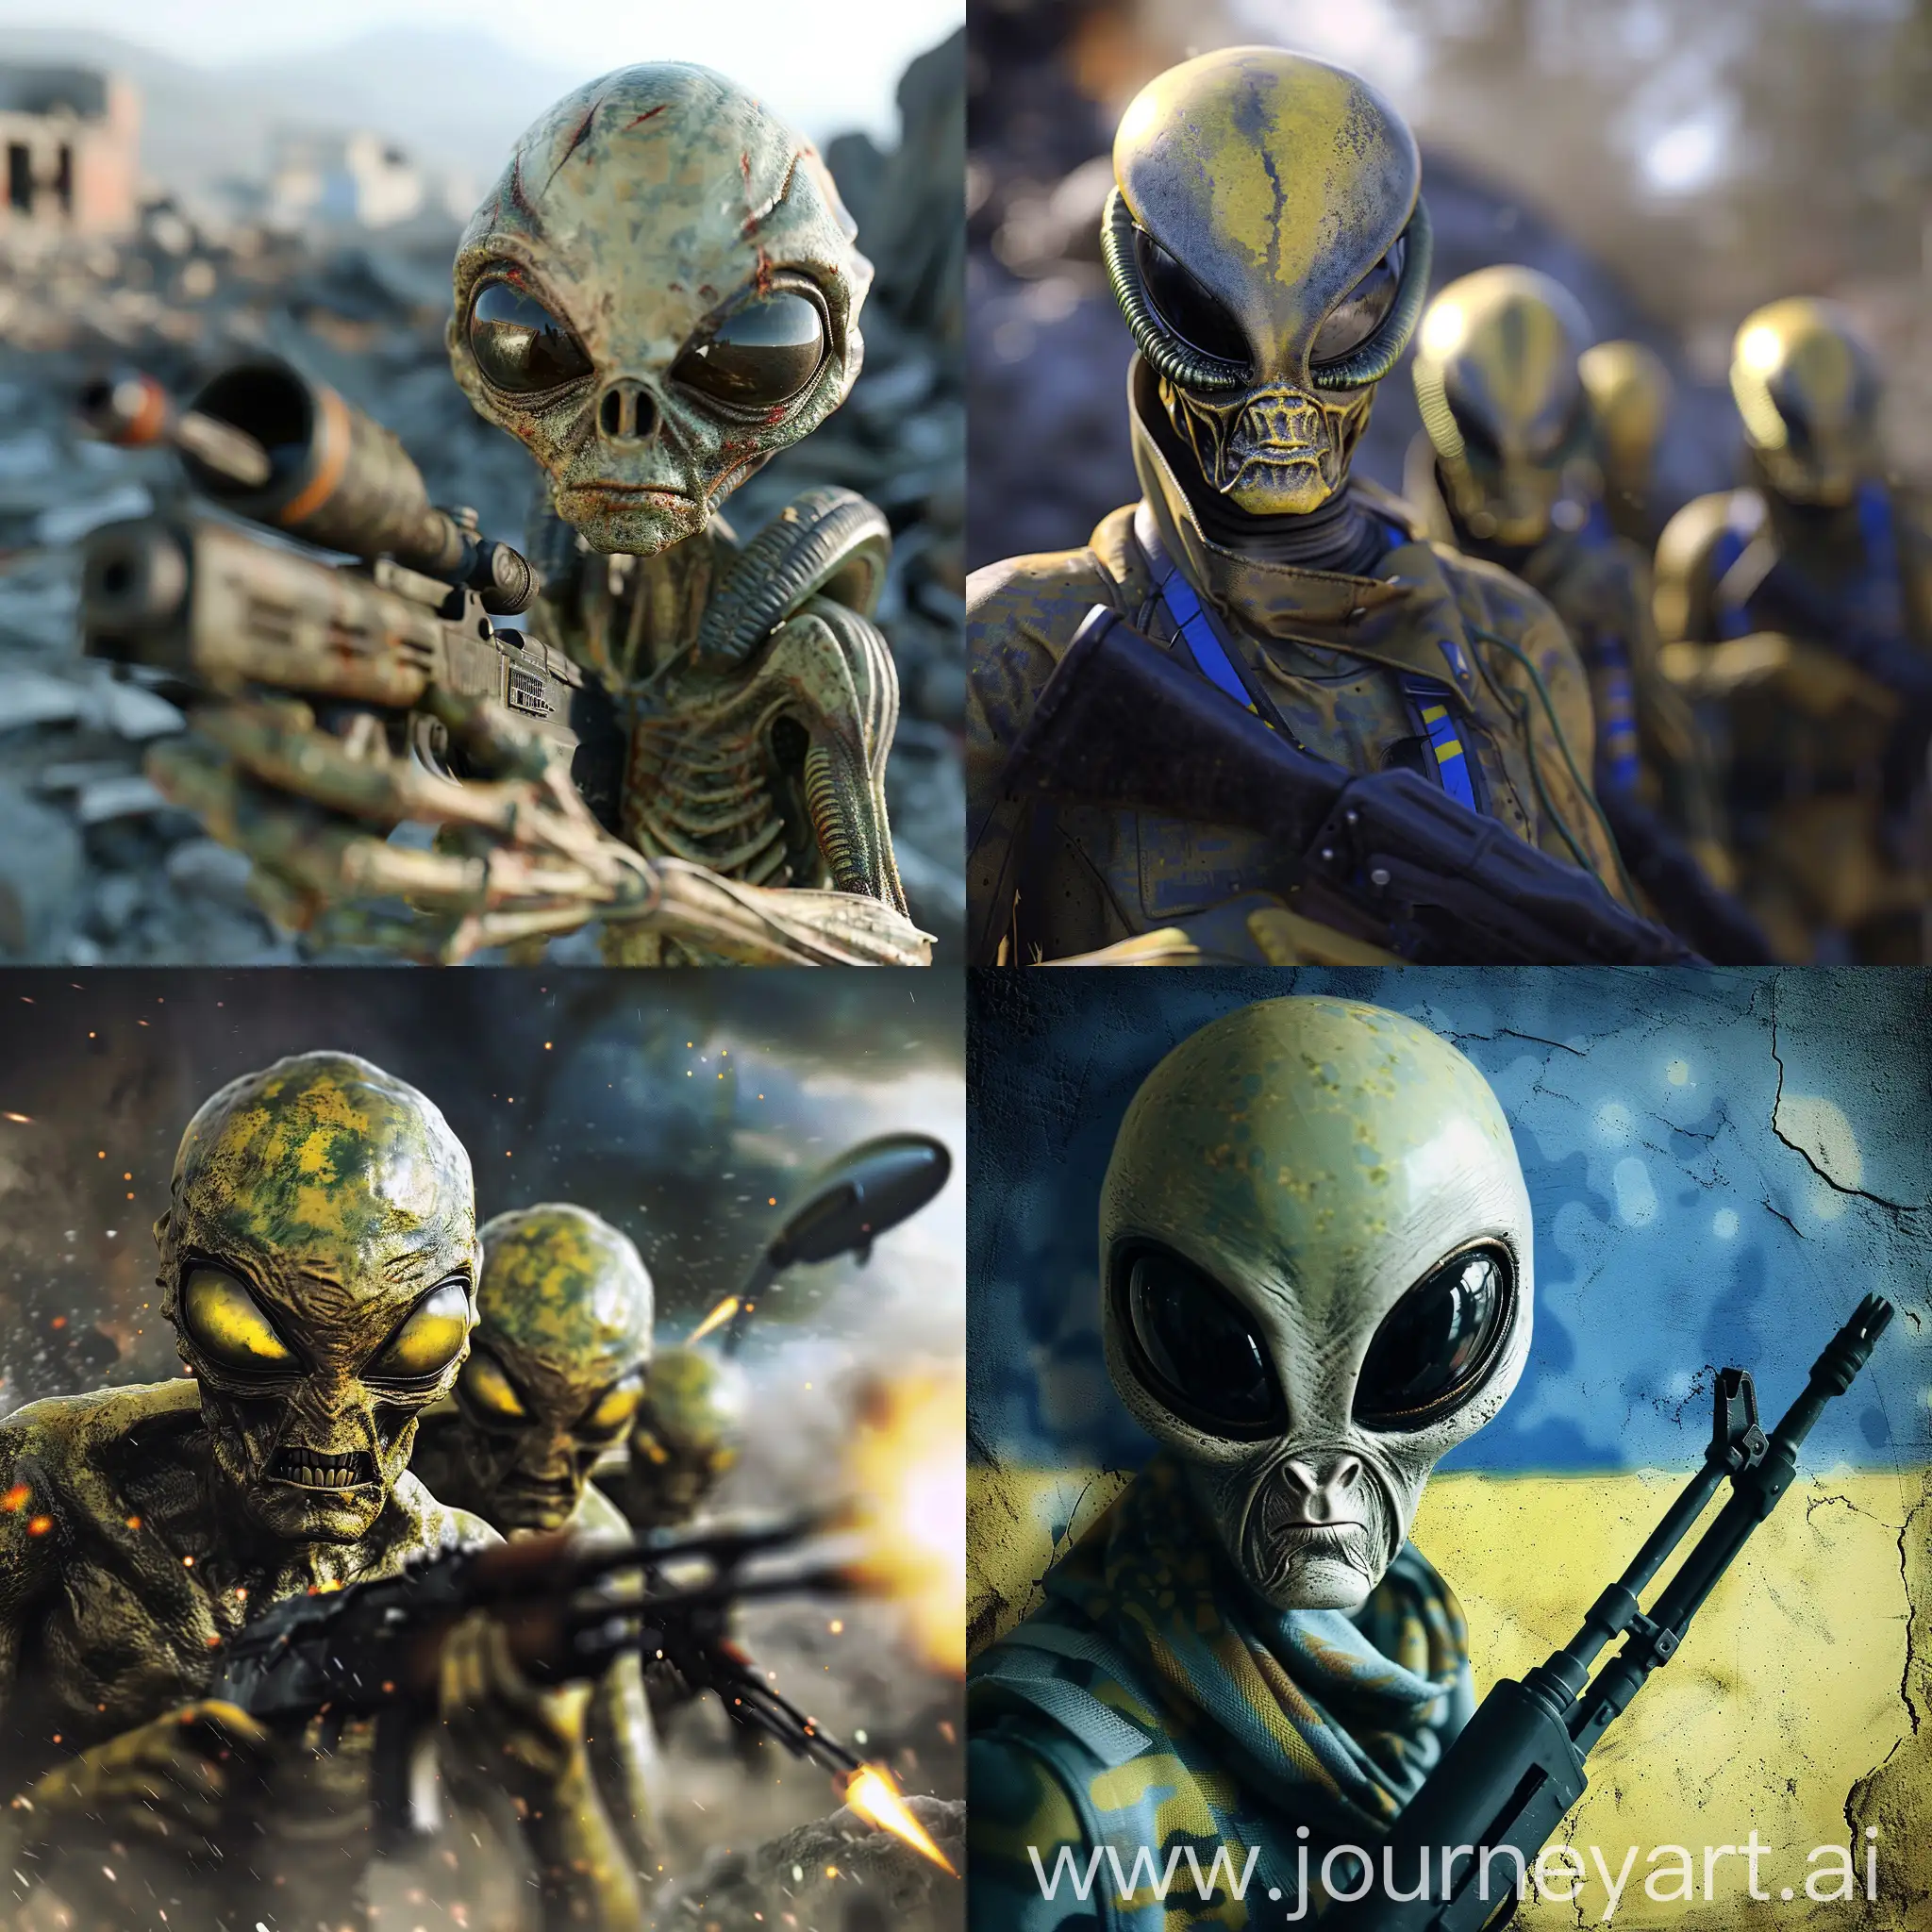 Aliens-Providing-Military-Support-to-Ukraine